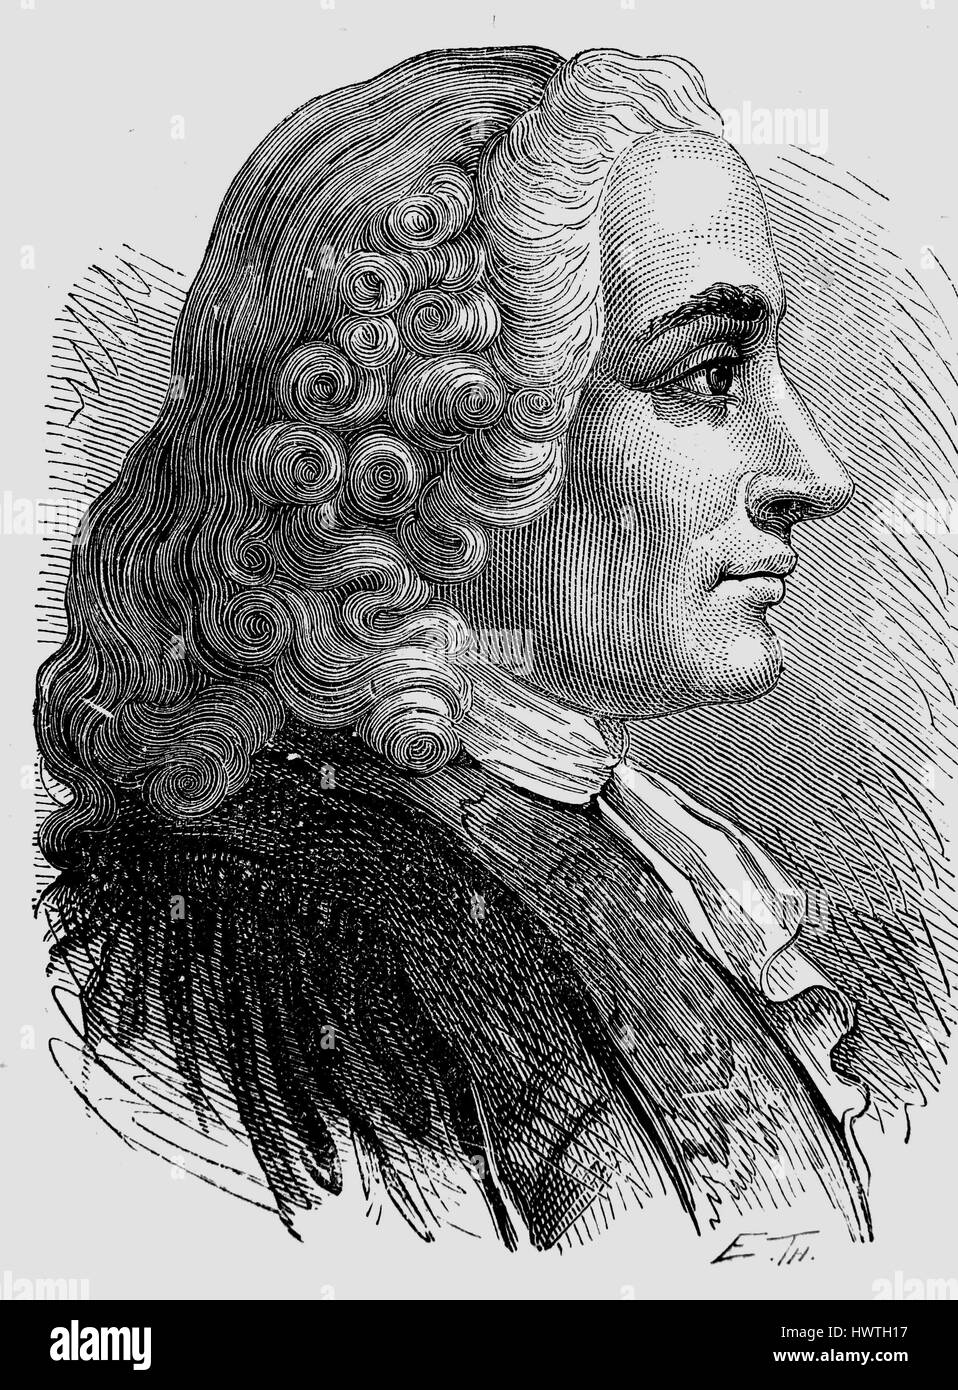 GUILLAUME-CHRÉTIEN de LAMOIGNON de MALESHERBES (1721-1794) French statesman and lawyer Stock Photo